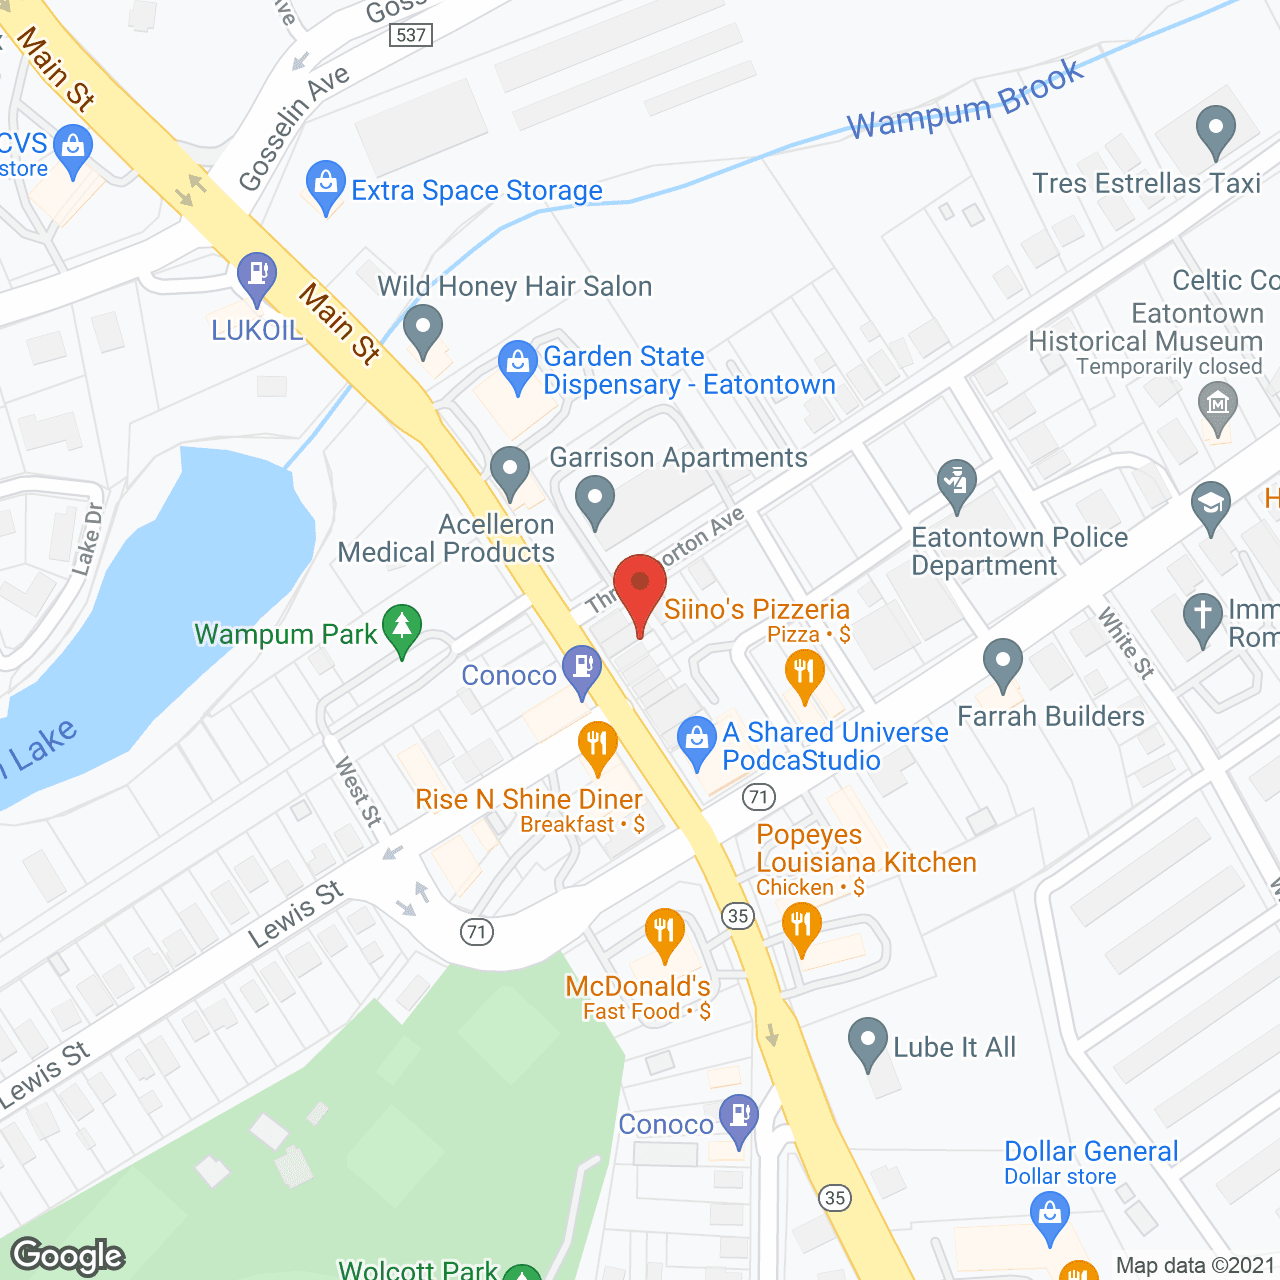 Home Instead - Eatontown, NJ in google map